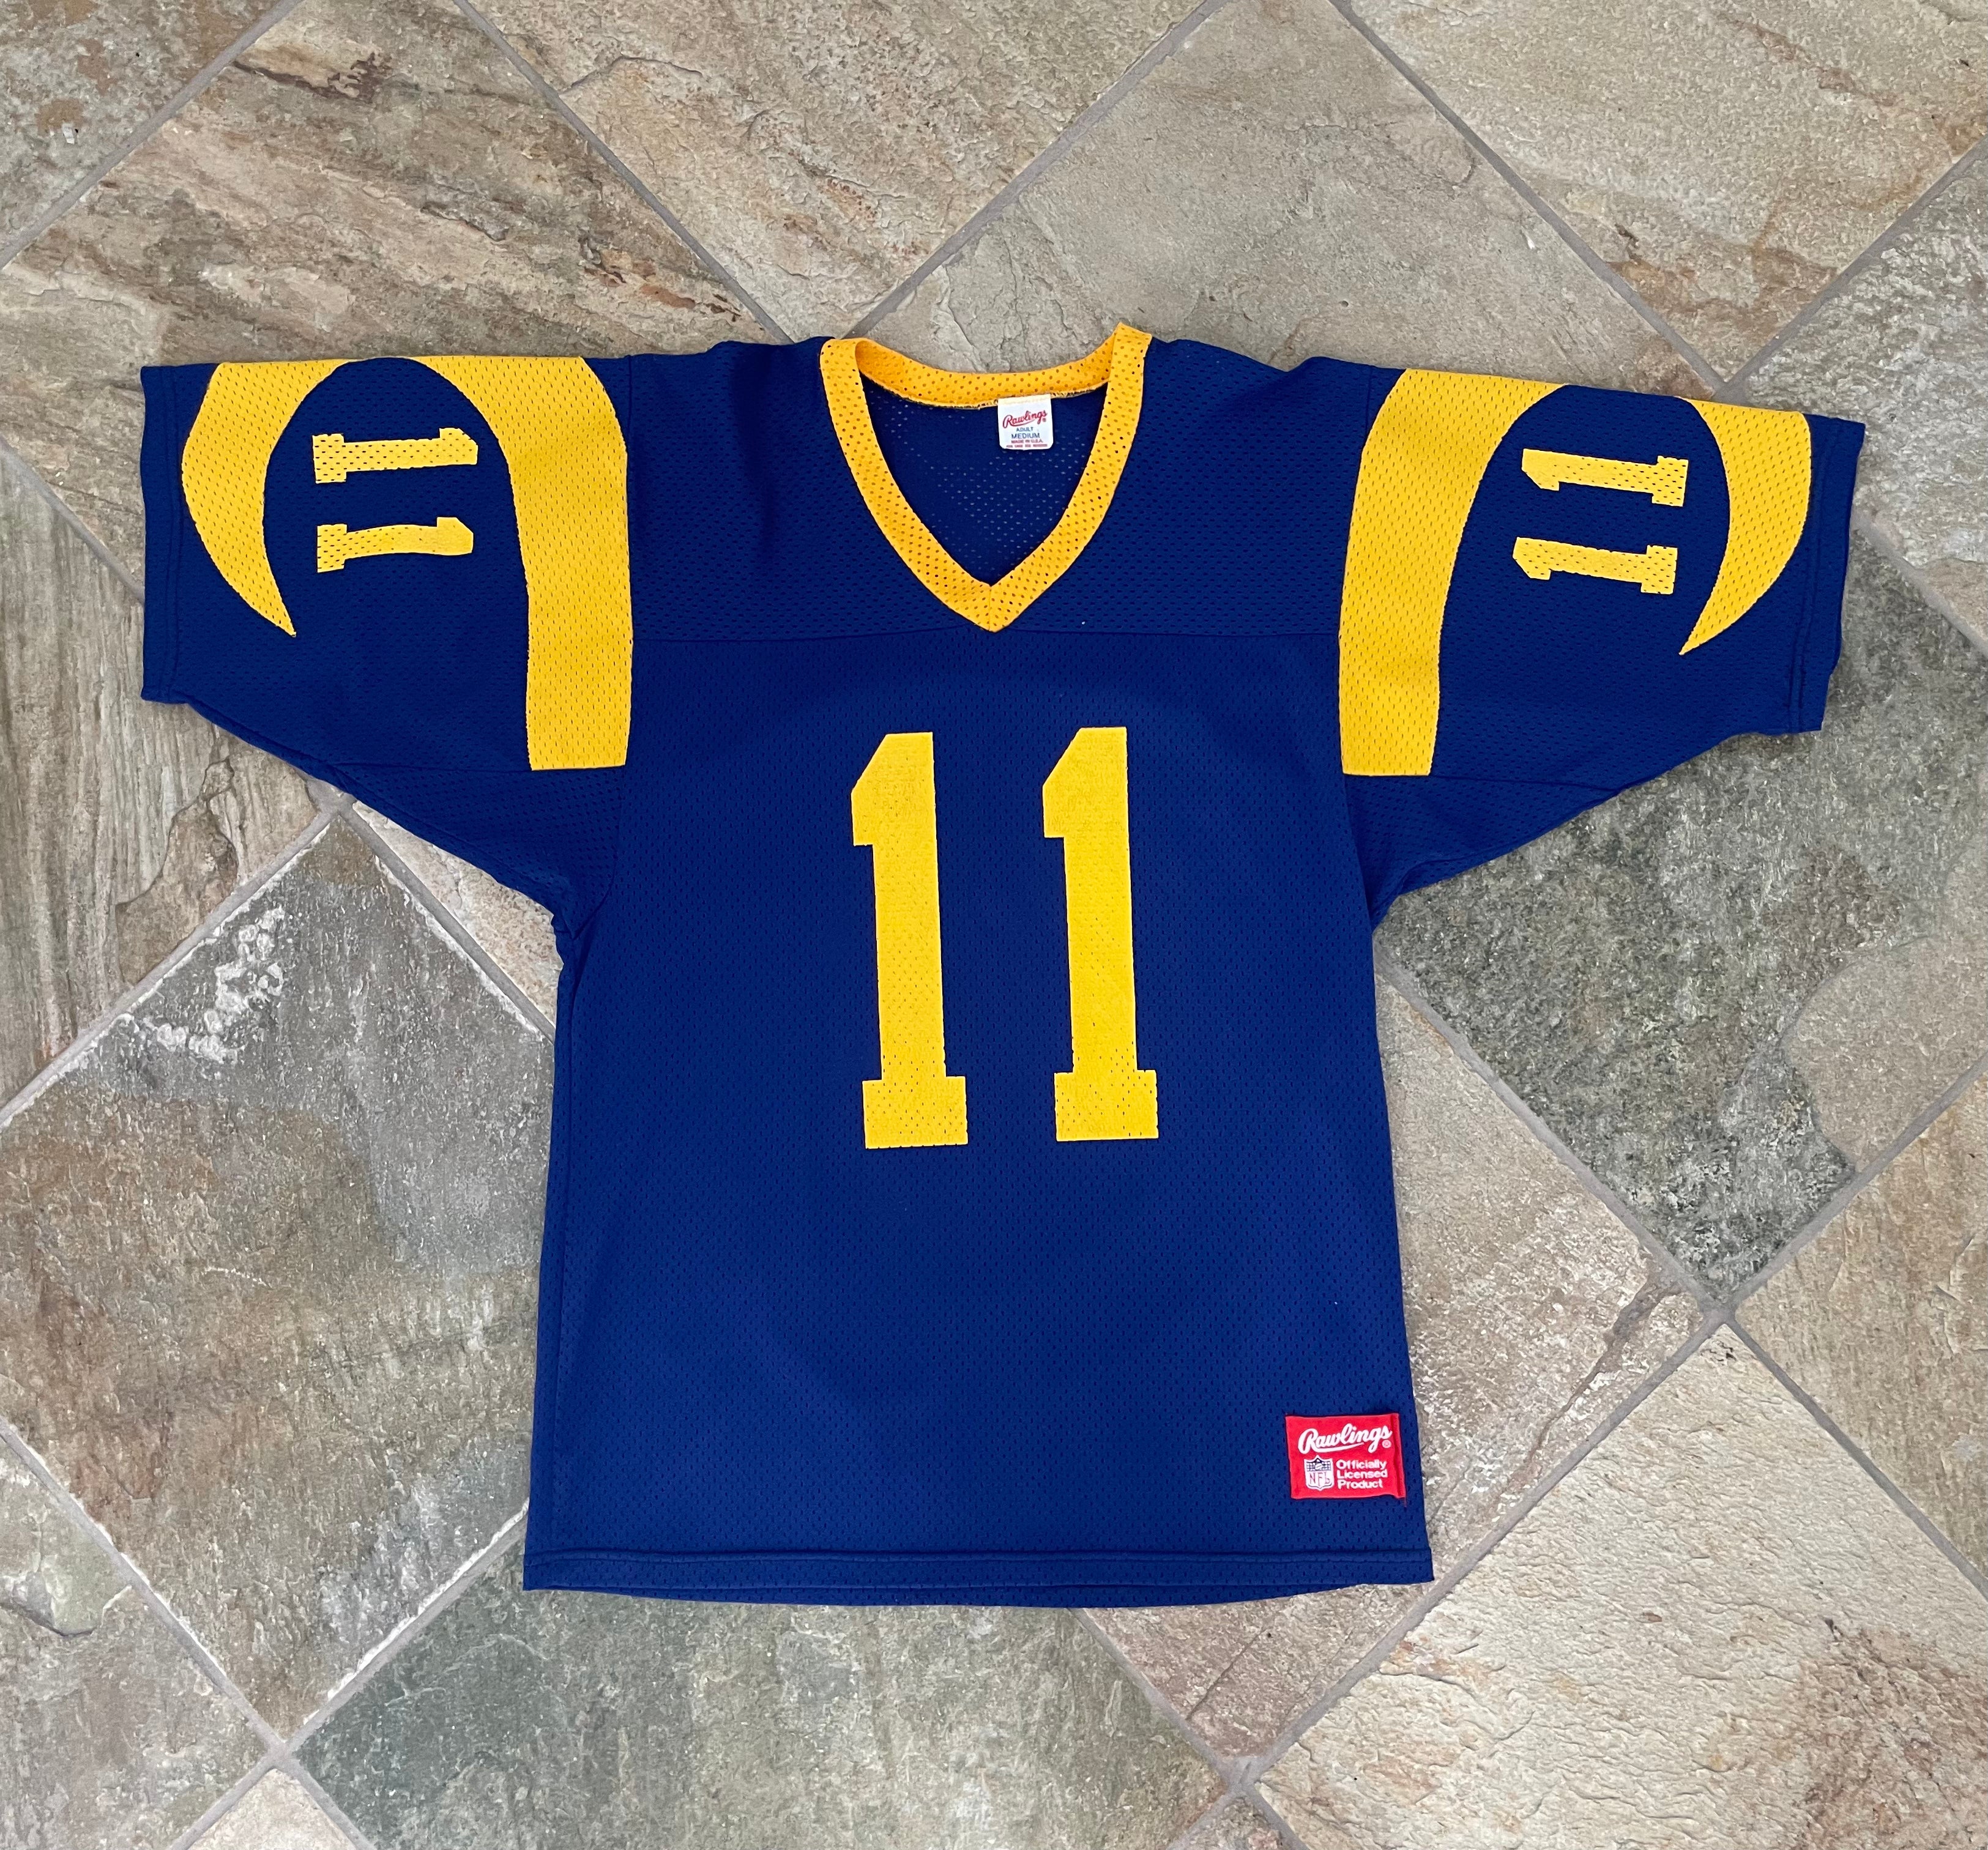 Made in USA Rawlings Rams Football Jersey